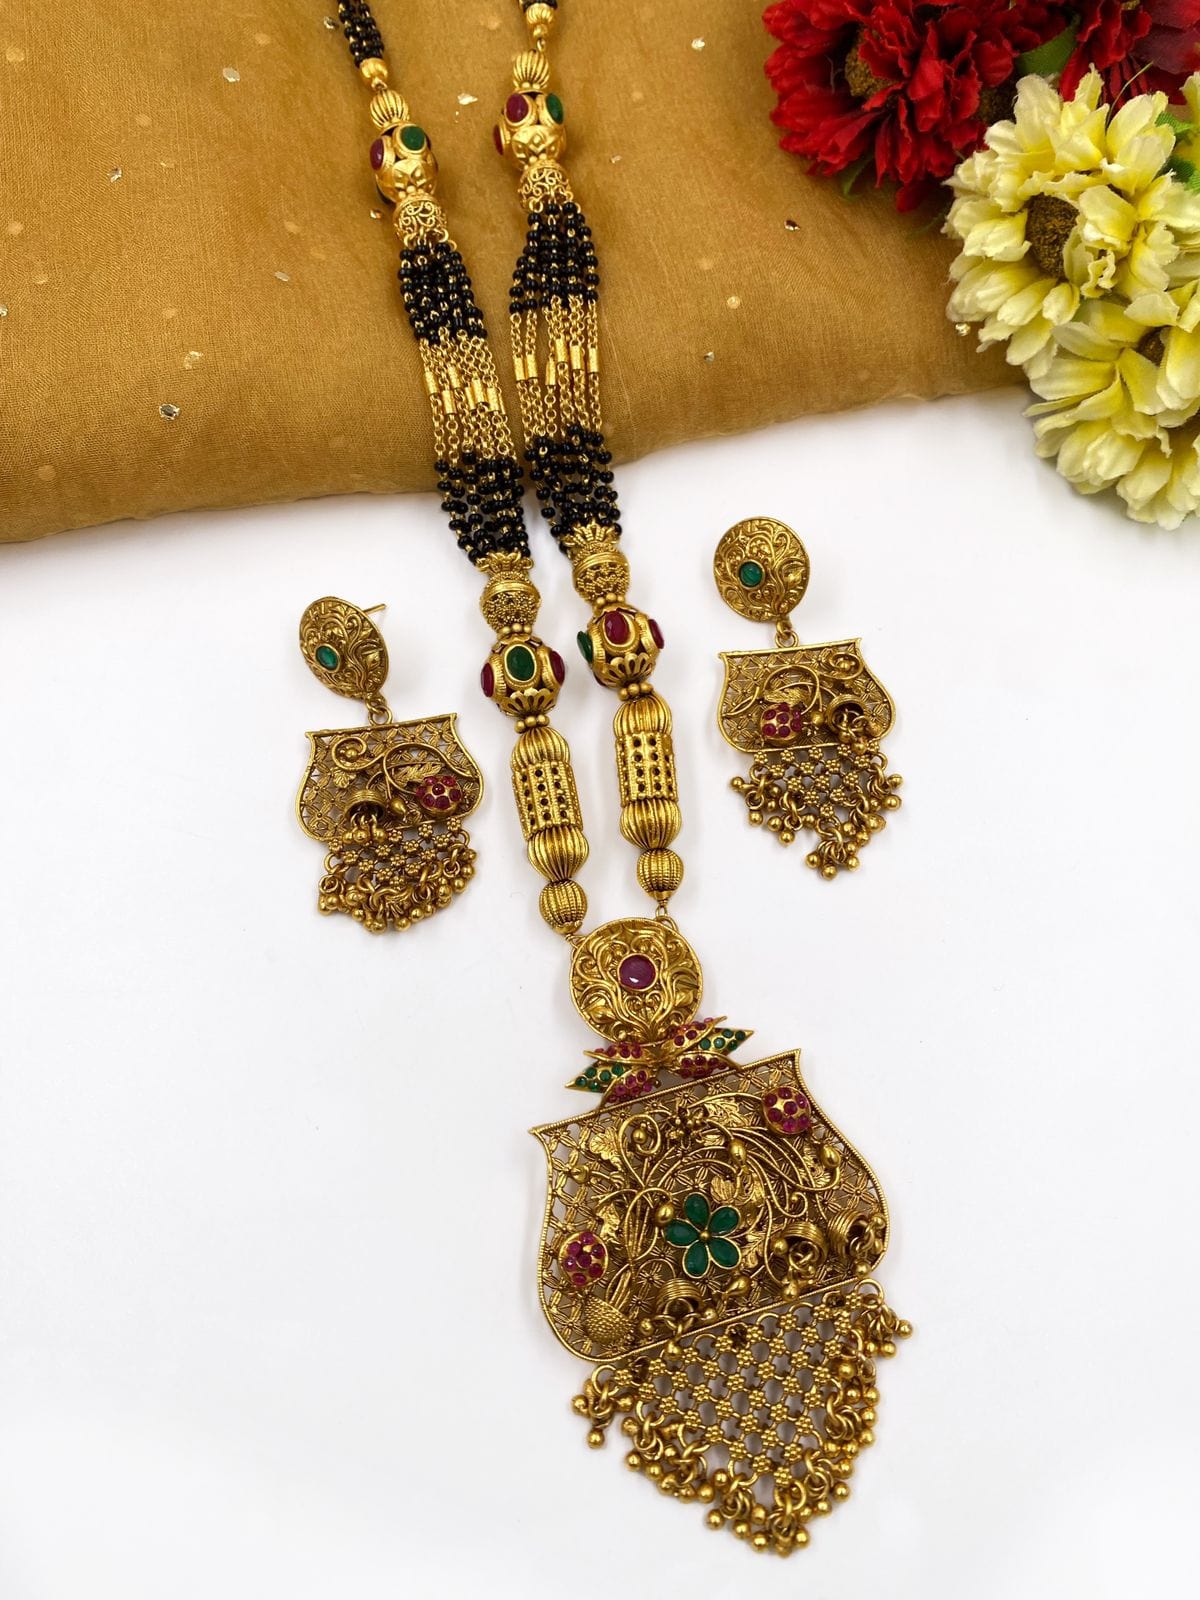 Antique Finish Designer Long Mangalsutra Necklace Set For Women By Gehna Shop Mangalsutras